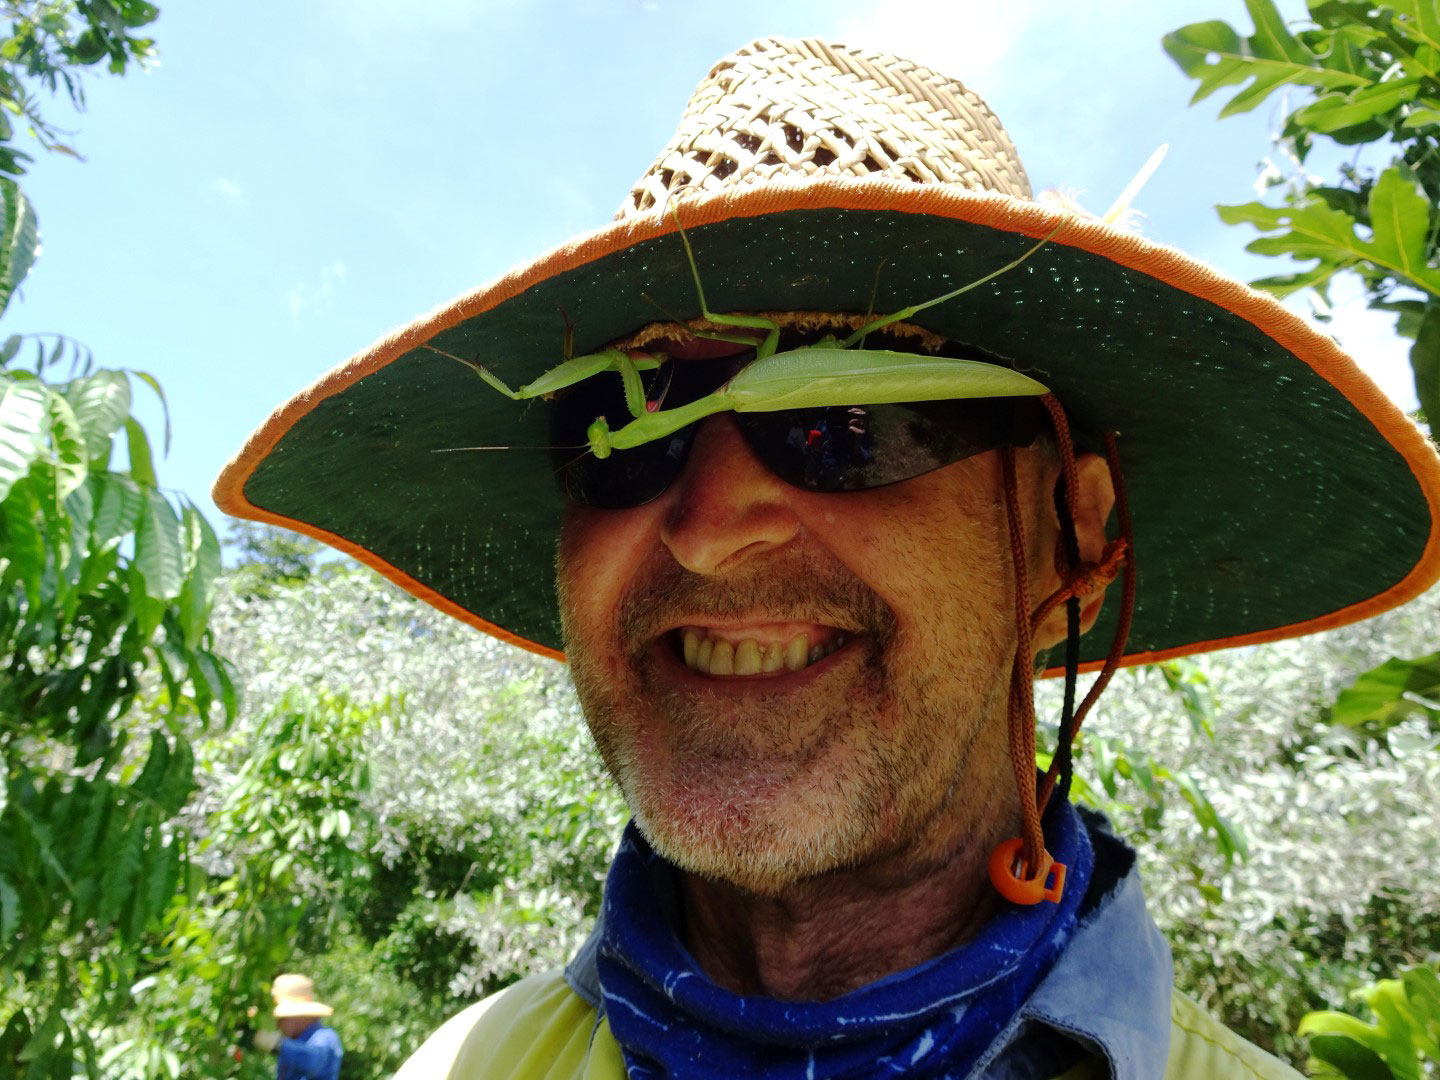 Volunteer with large grasshopper upside down on hat brim